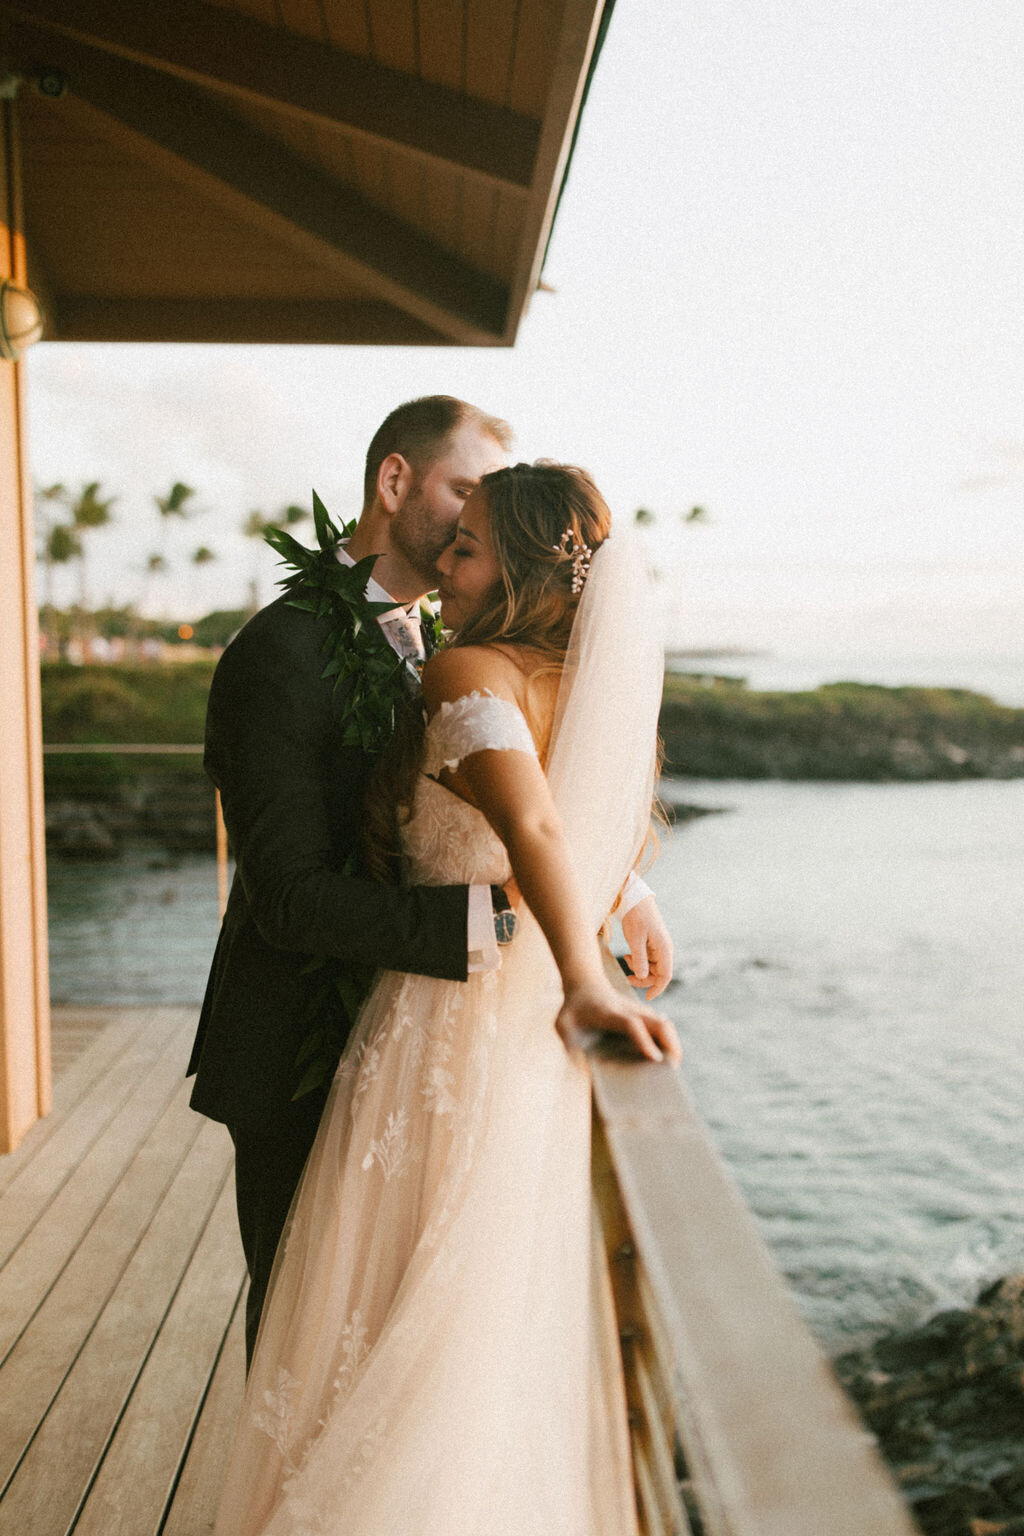 Maui Love Weddings and Events Maui Hawaii Full Service Wedding Planning Coordinating Event Design Company Destination Wedding 19